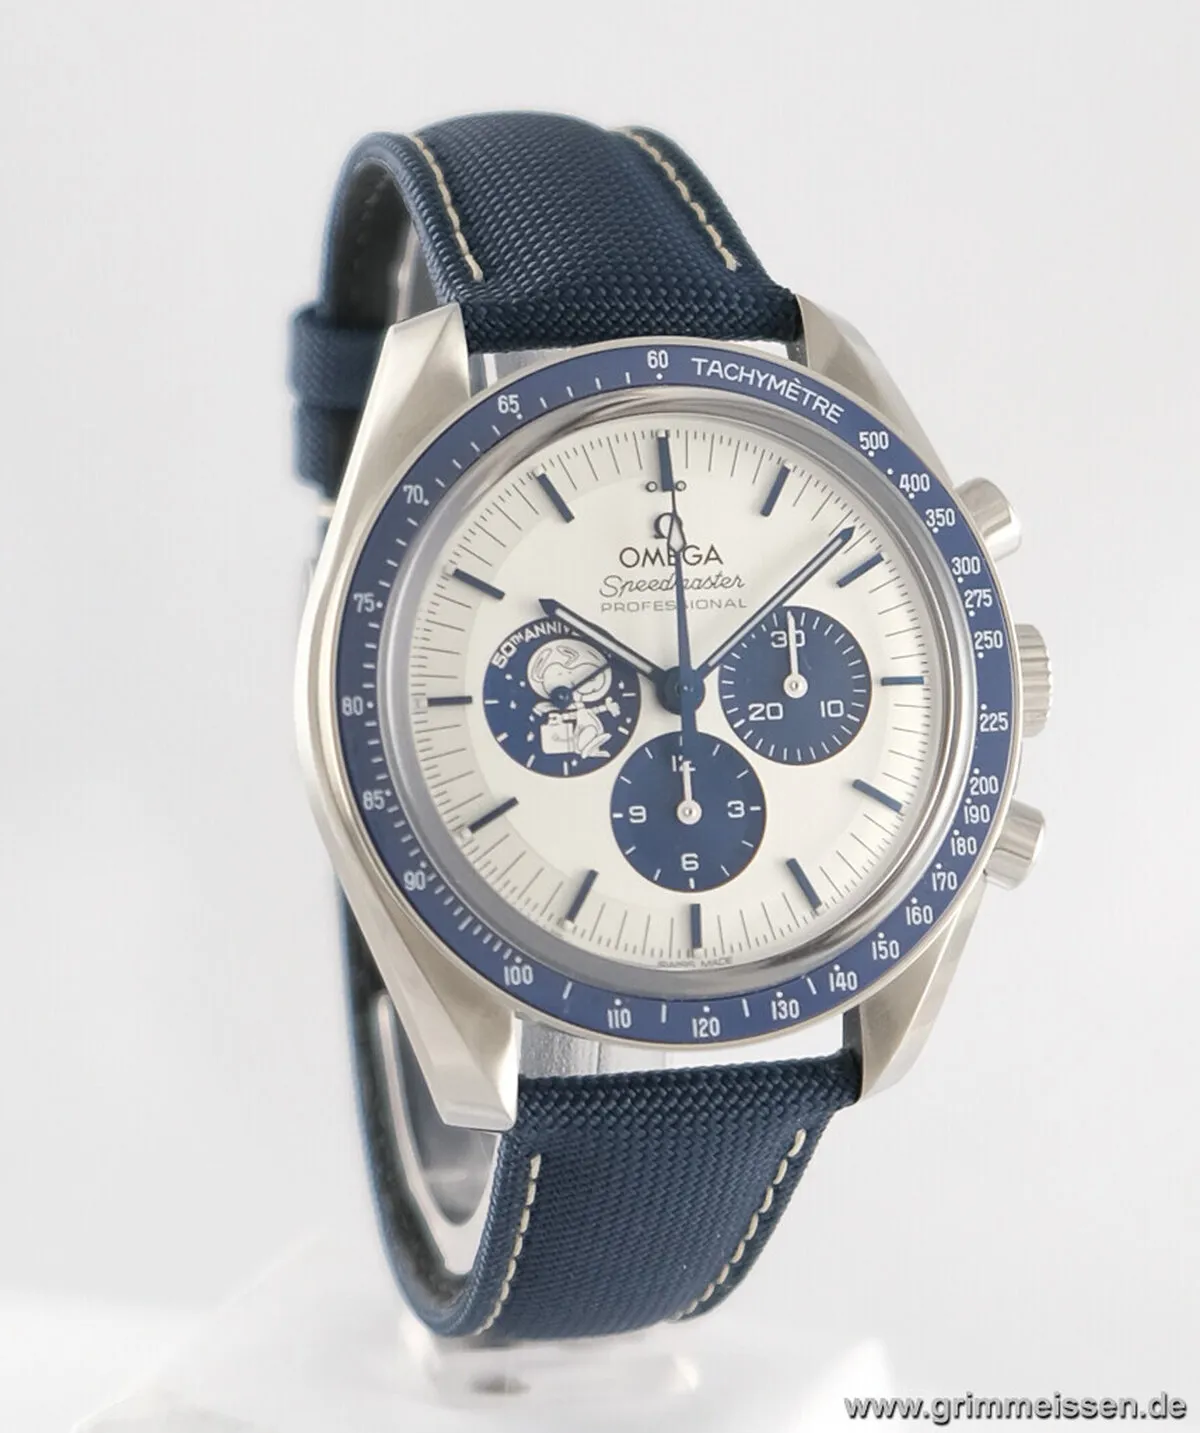 Omega Speedmaster Moon watch 310.32.42.50.02.001 40mm Stainless steel White